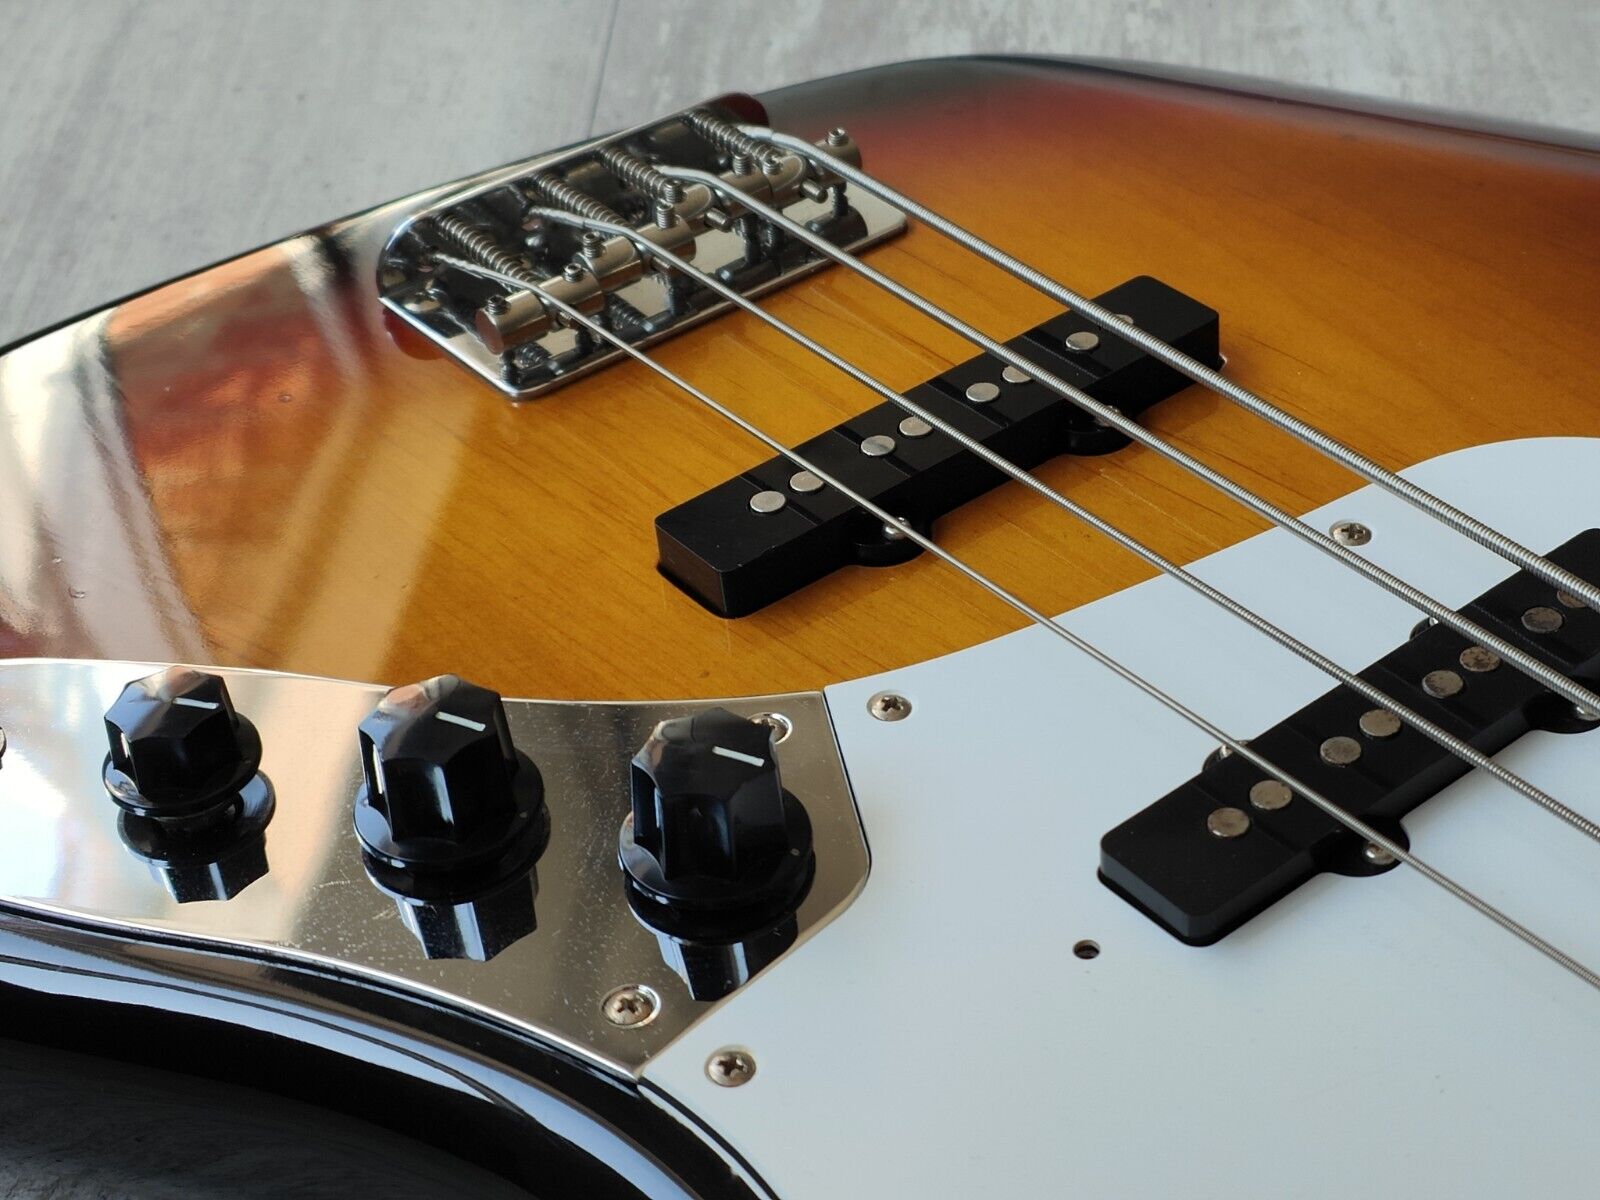 2006 Fender Japan Jazz Bass Standard (Sunburst)